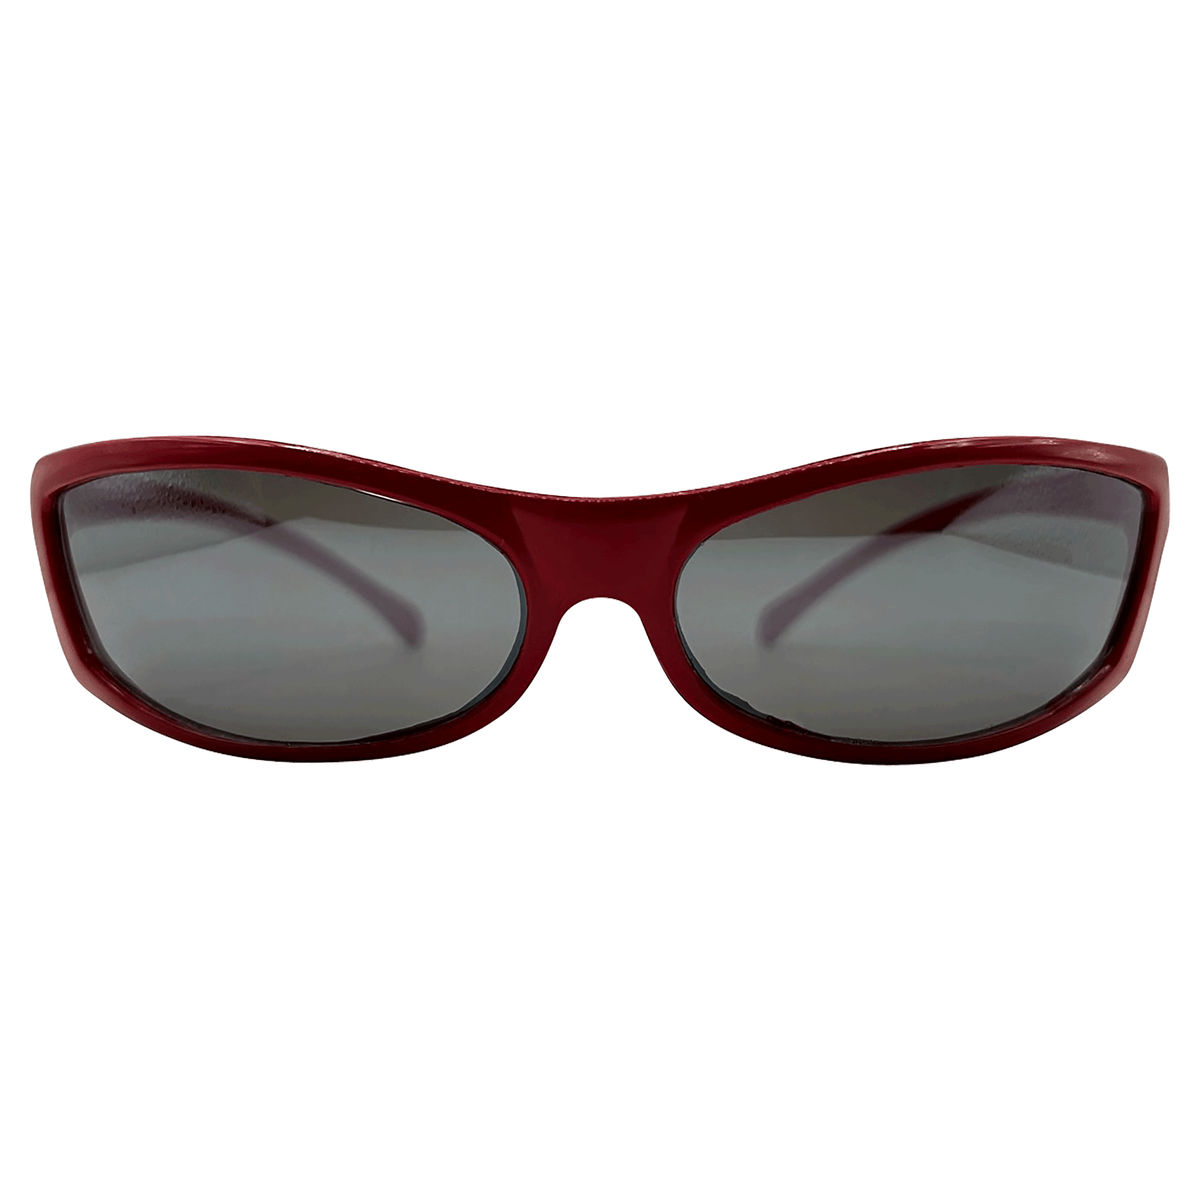 Shop PLEAZER Vintage Cat-Eye Sports Sunglasses for Women Red